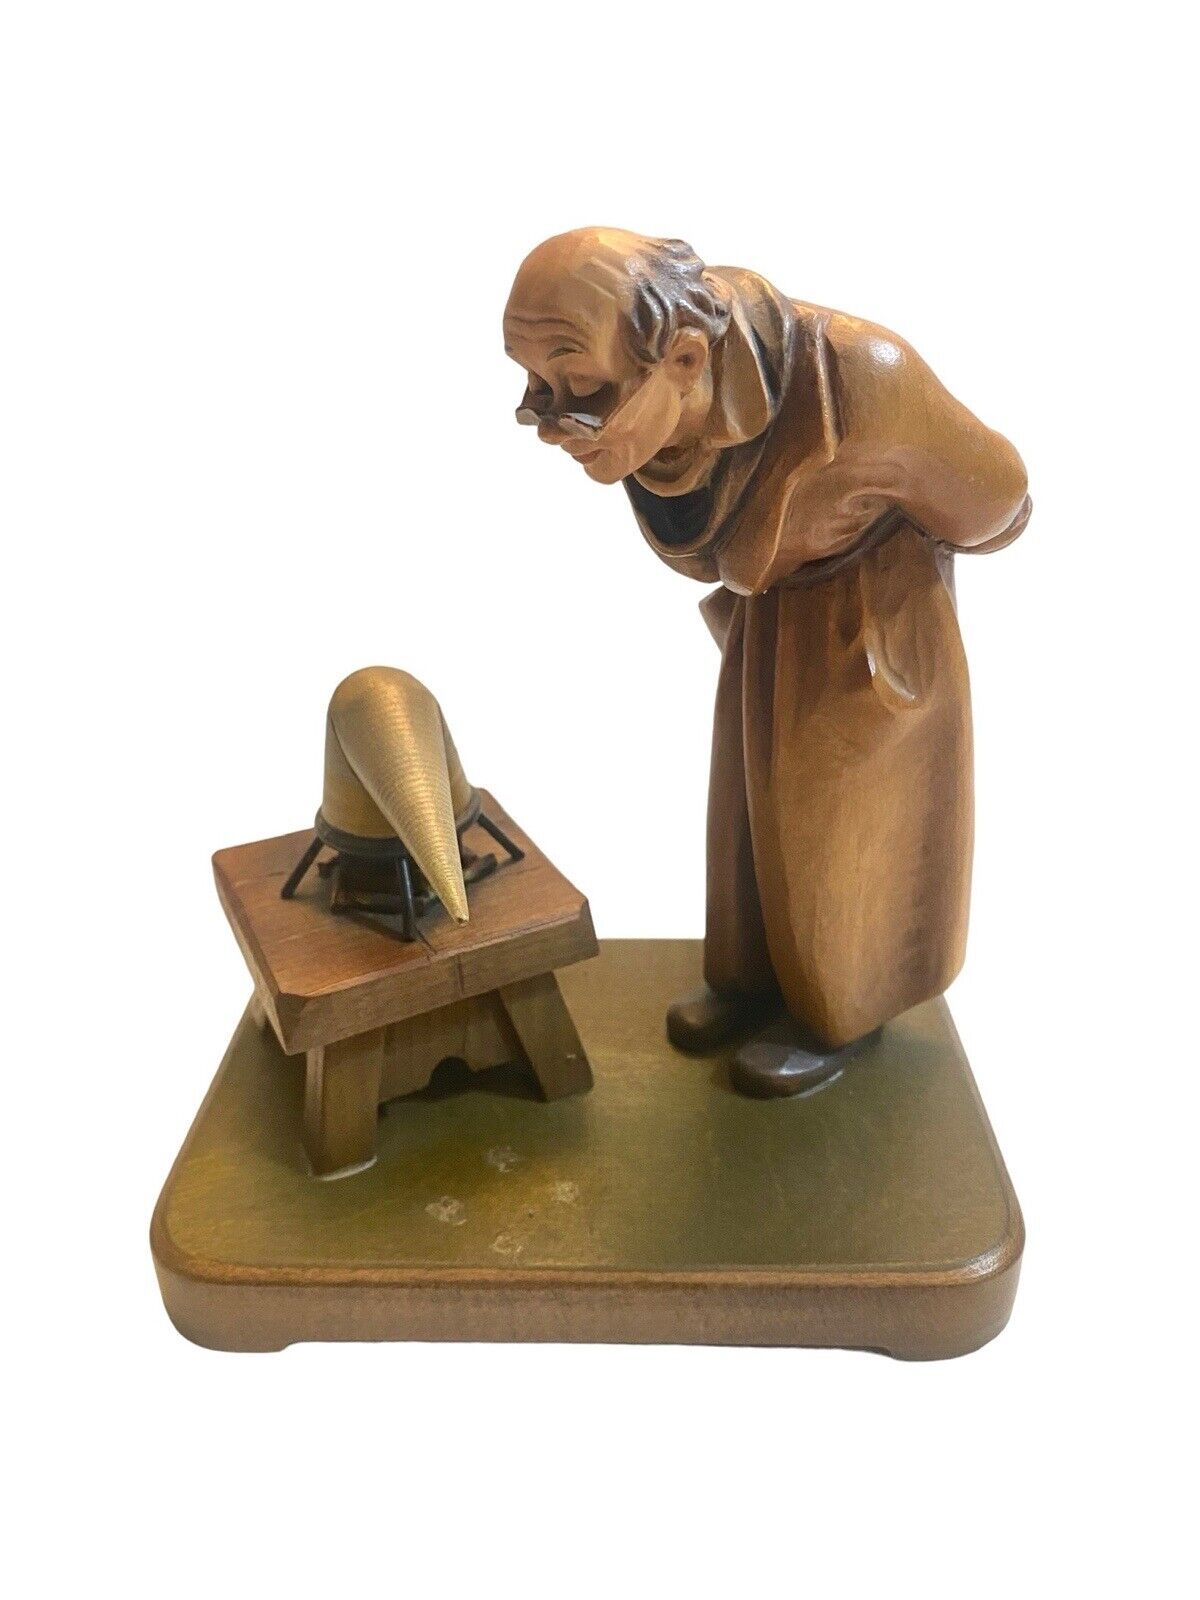 Anri The Alchemist or Chemist Wood Carved Figurine from a Carl Spitzweg Scene